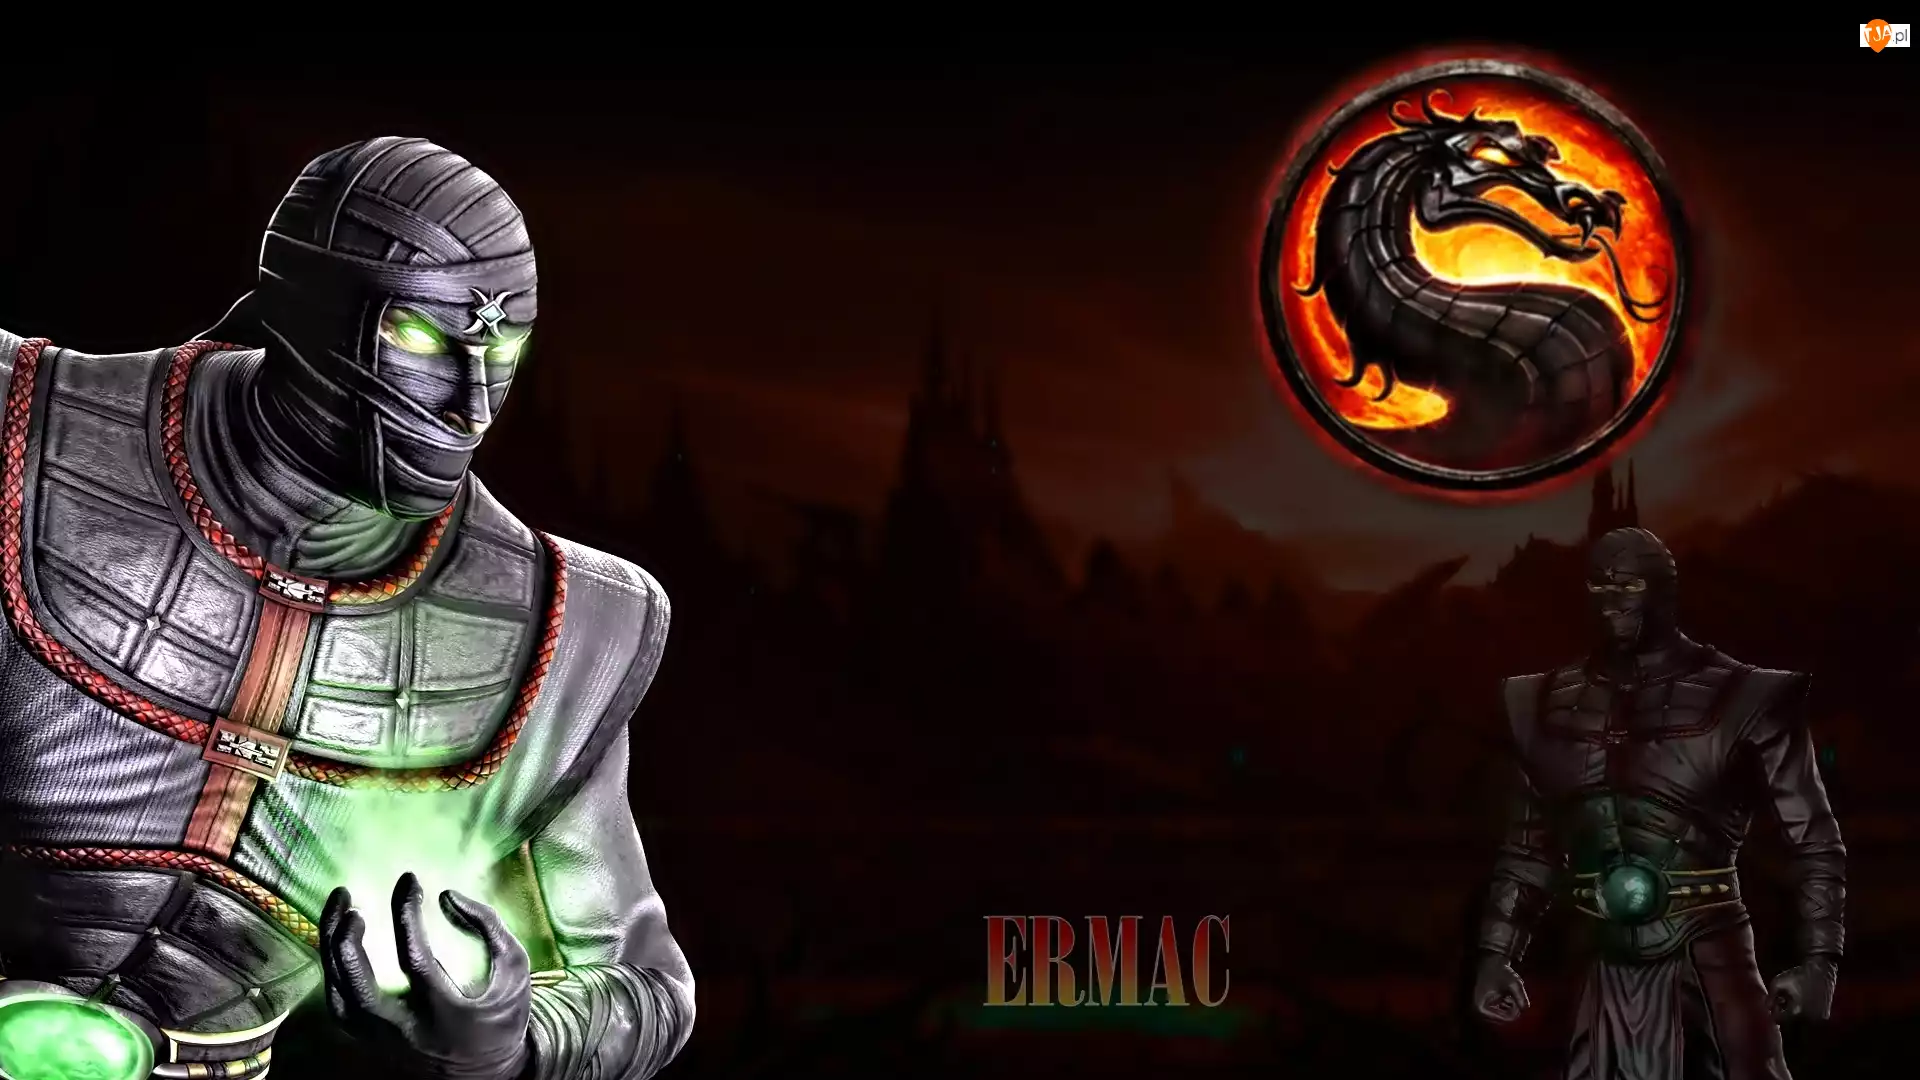 Ermac, Mortal Kombat